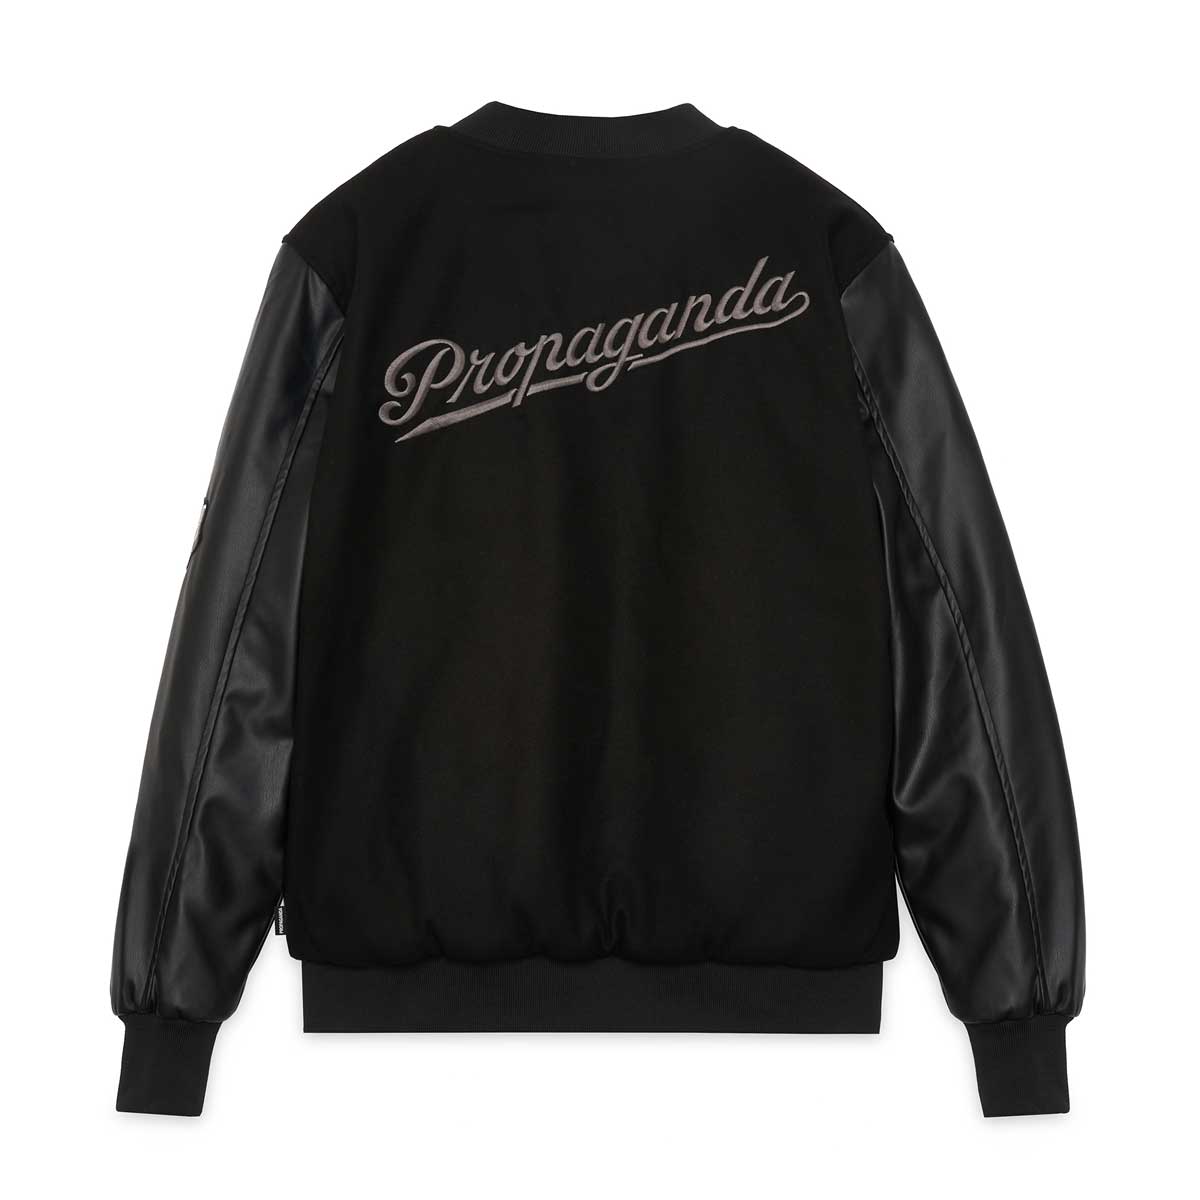 Shop - Propaganda Clothing Brand | PROPAGANDA Official Online Store